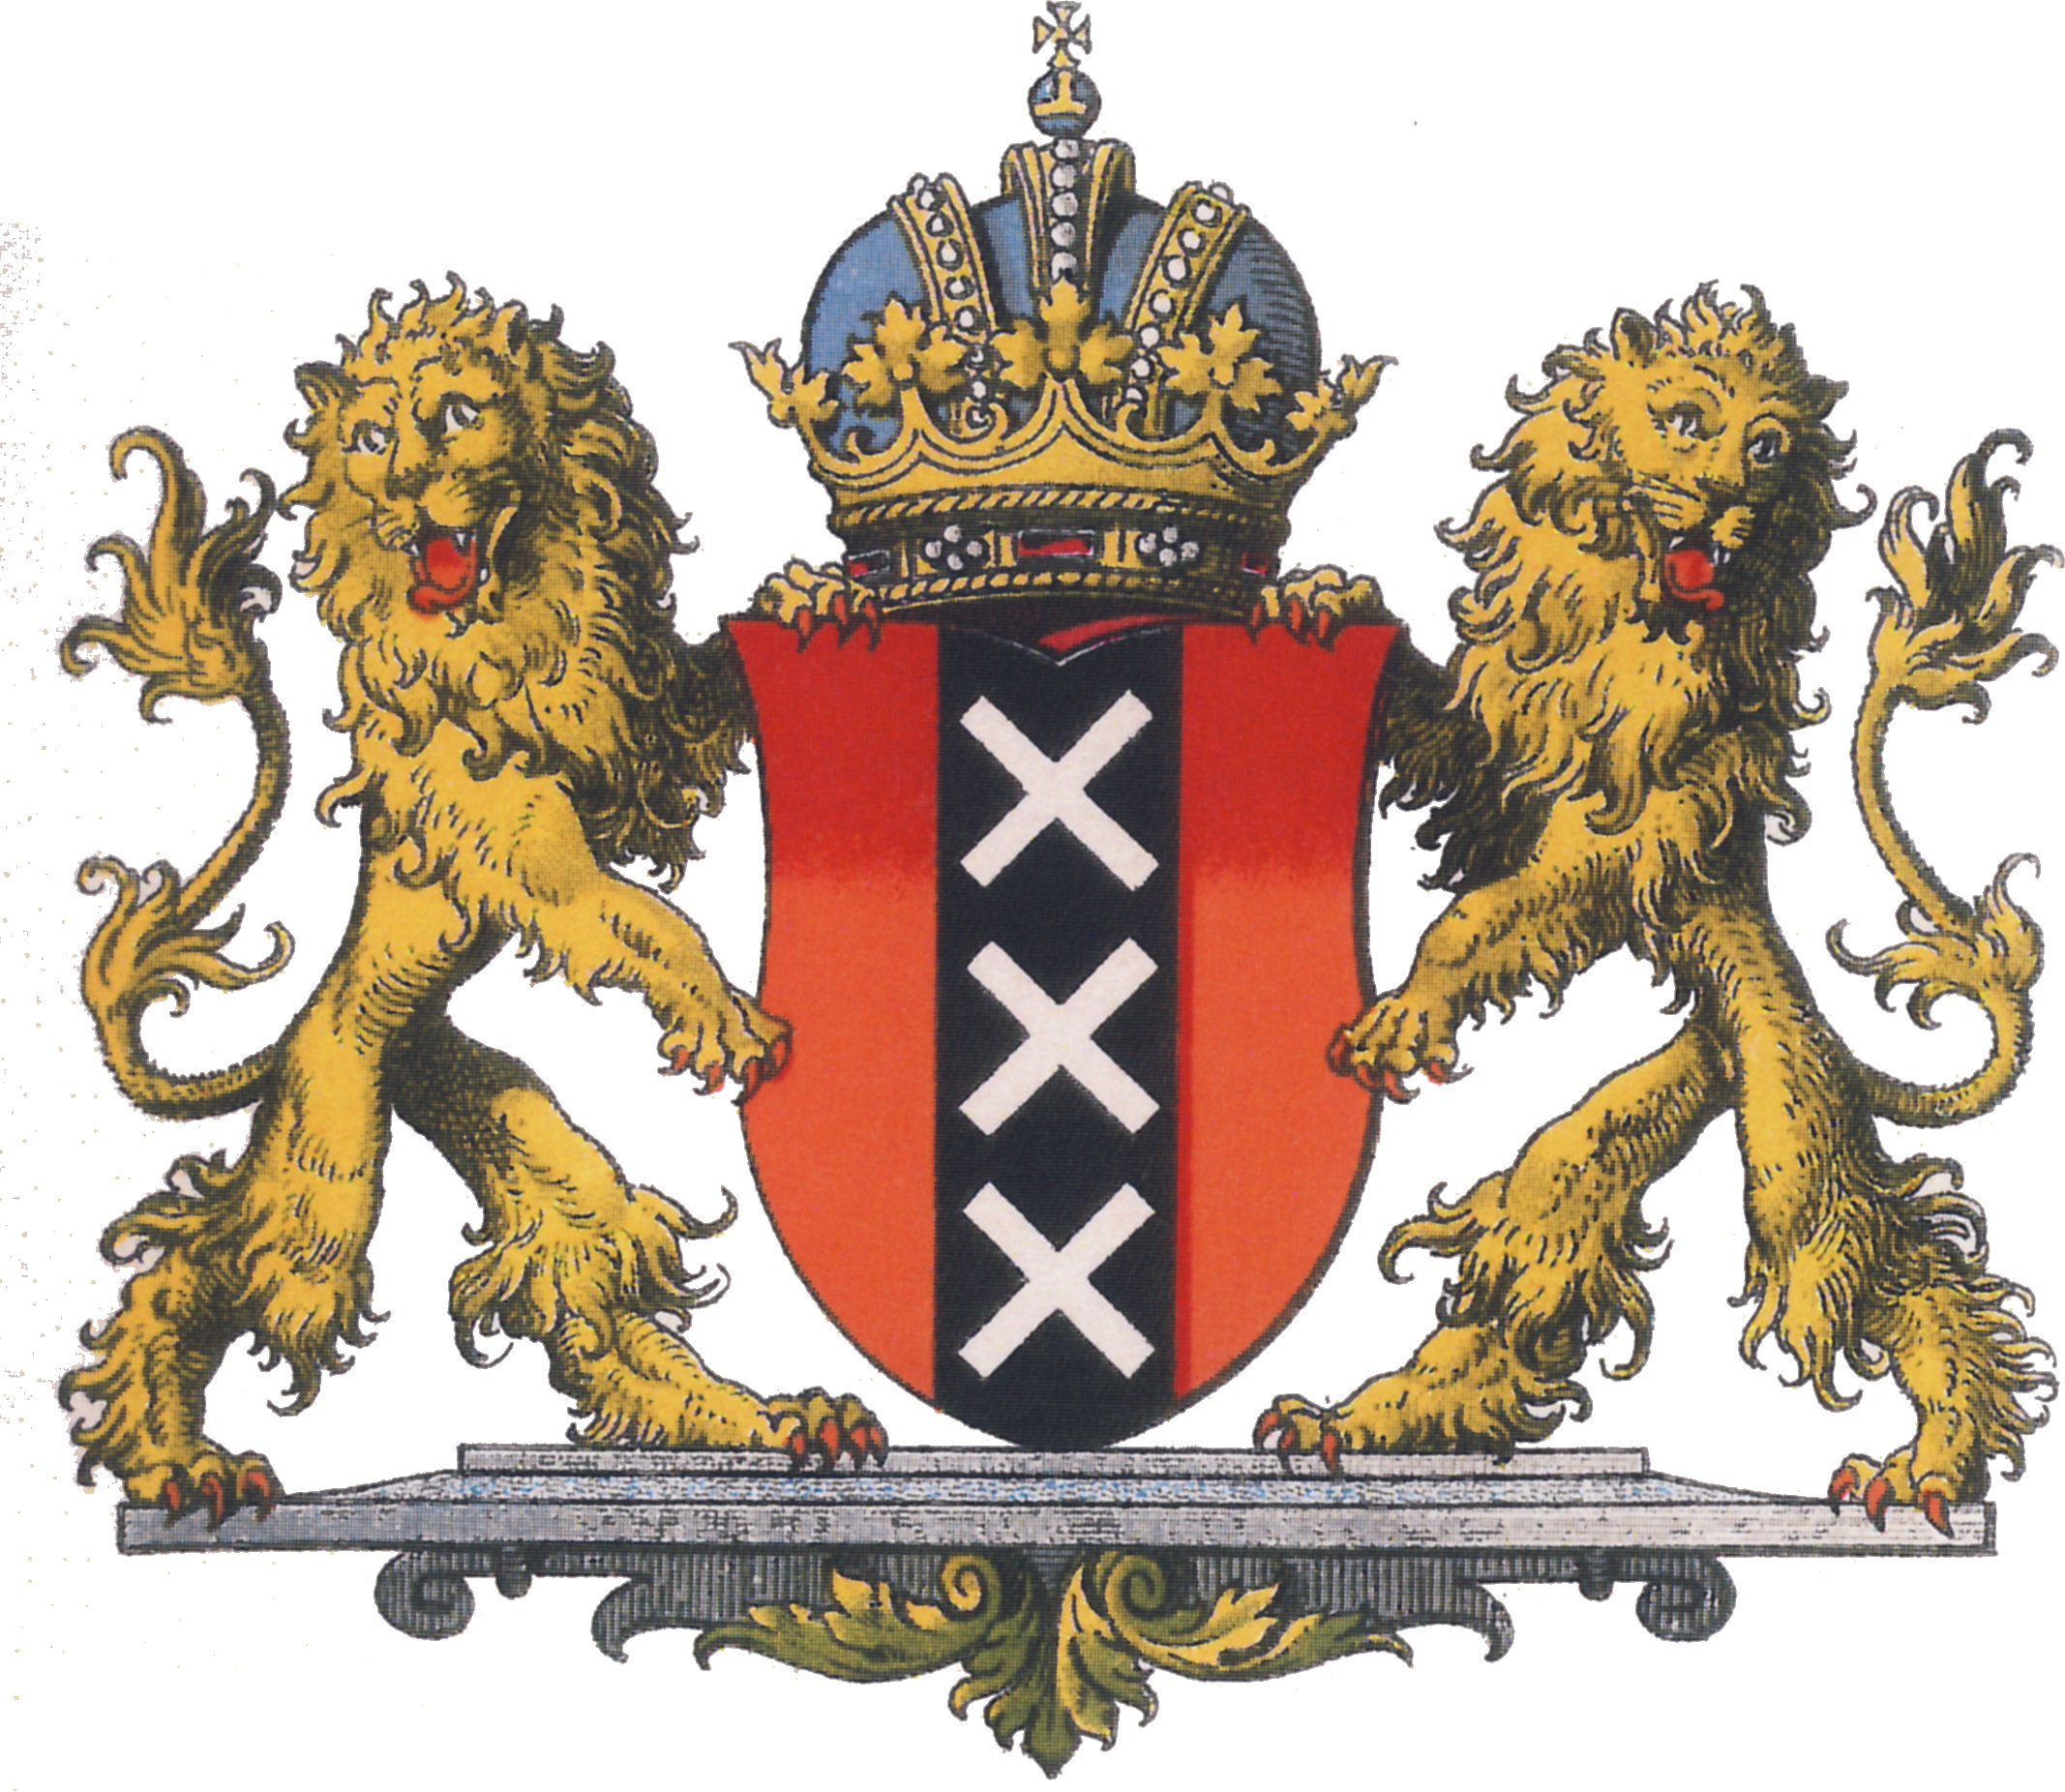 Ströhl Ha Wappen Amsterdam - Amsterdam Coat Of Arms (2134x1852)